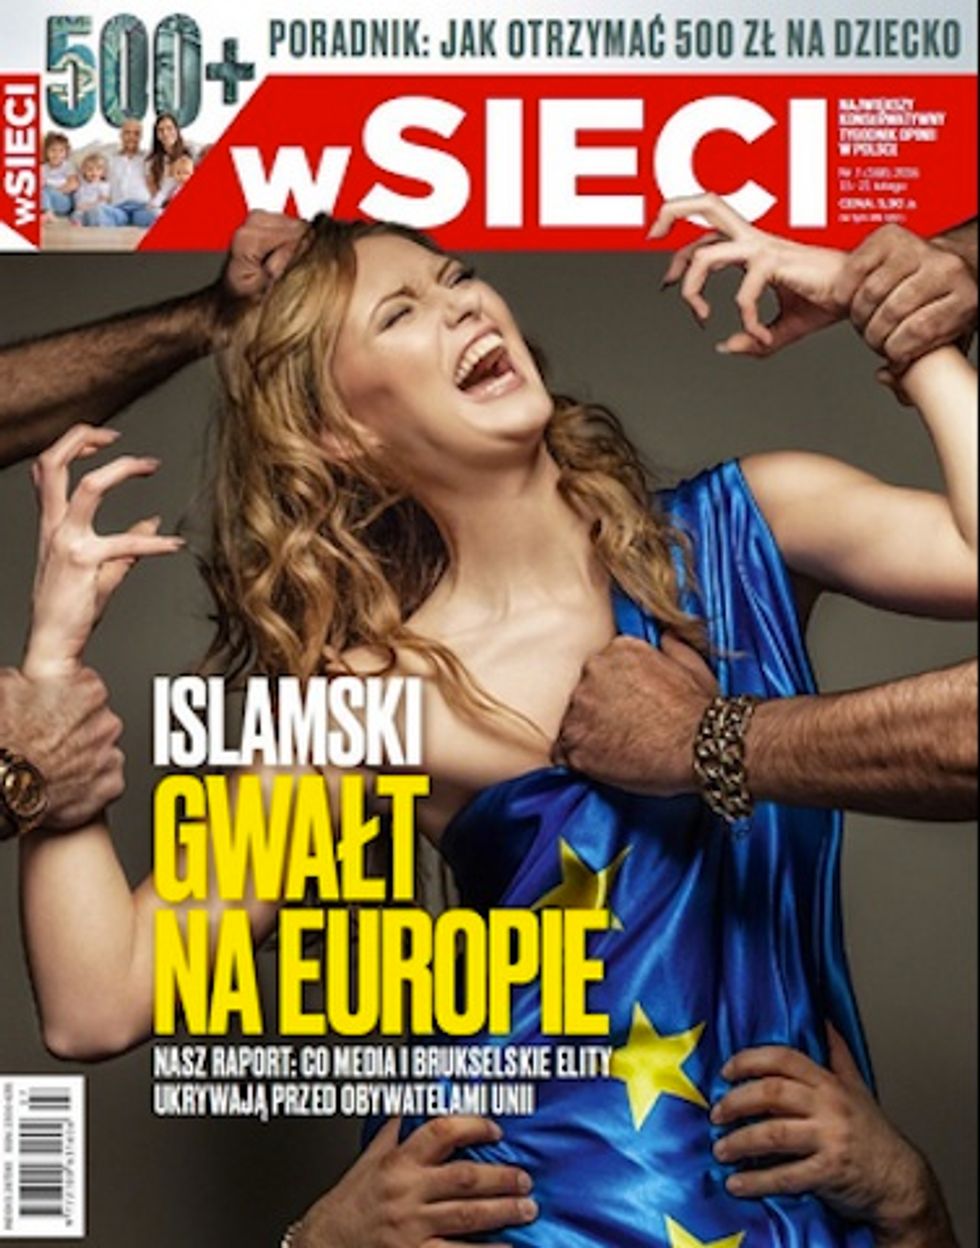 Islamic Rape of Europe': Polish Magazine's Eye-Popping Cover Has Blonde Woman Being Groped by Dark-Skinned Men